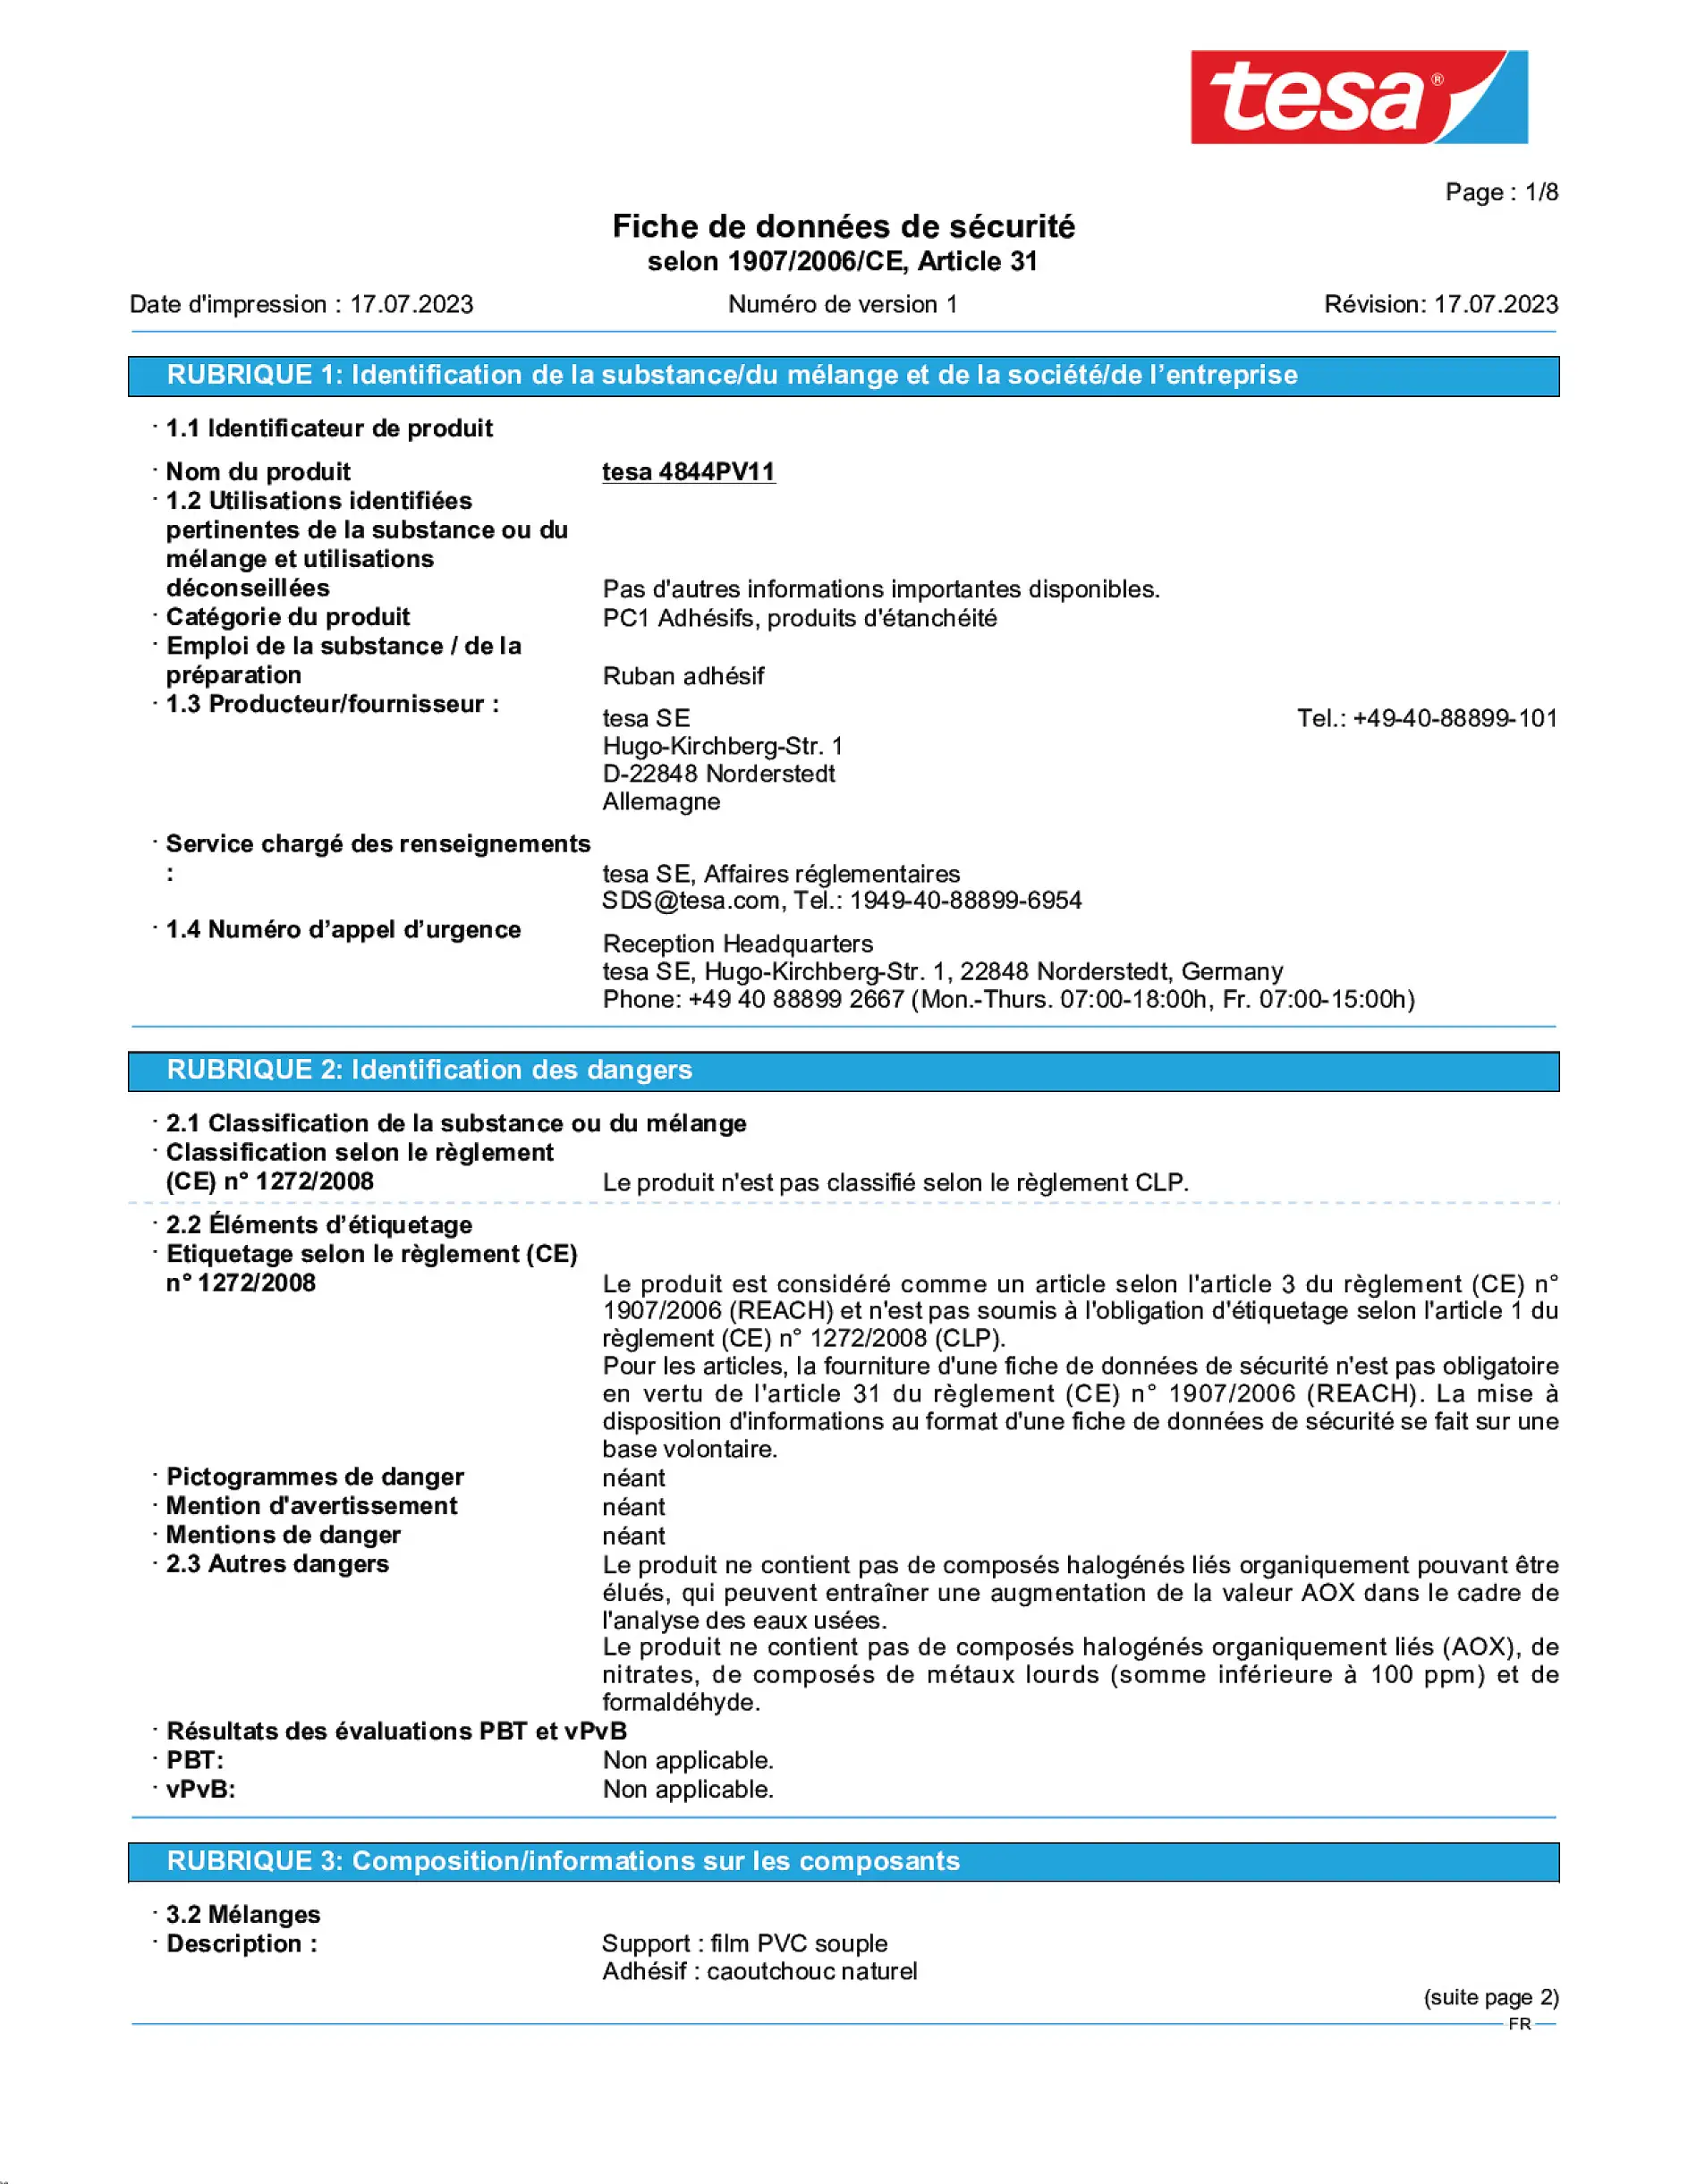 Safety data sheet_tesa® Professional 67001_fr-FR_v1